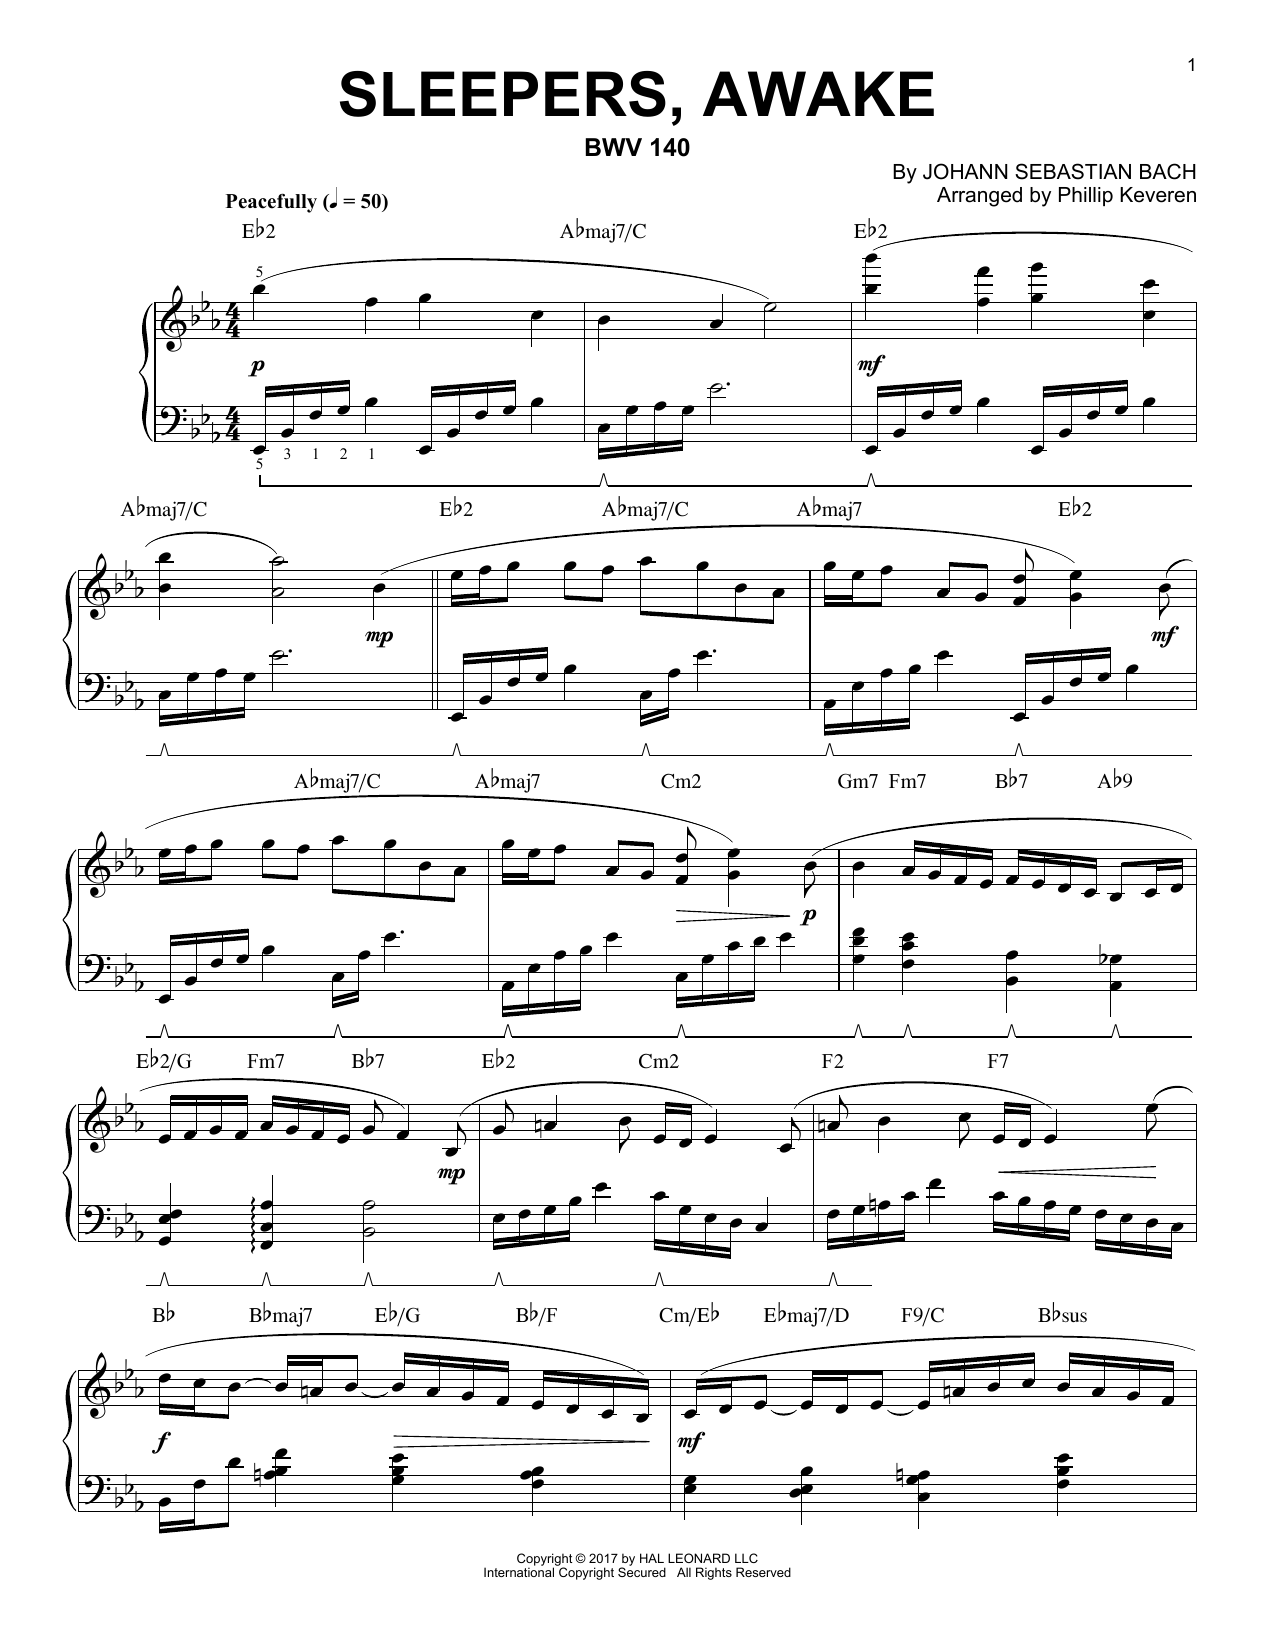 Johann Sebastian Bach Sleepers, Awake, BWV 140 [Jazz version] (arr. Phillip Keveren) Sheet Music Notes & Chords for Piano - Download or Print PDF